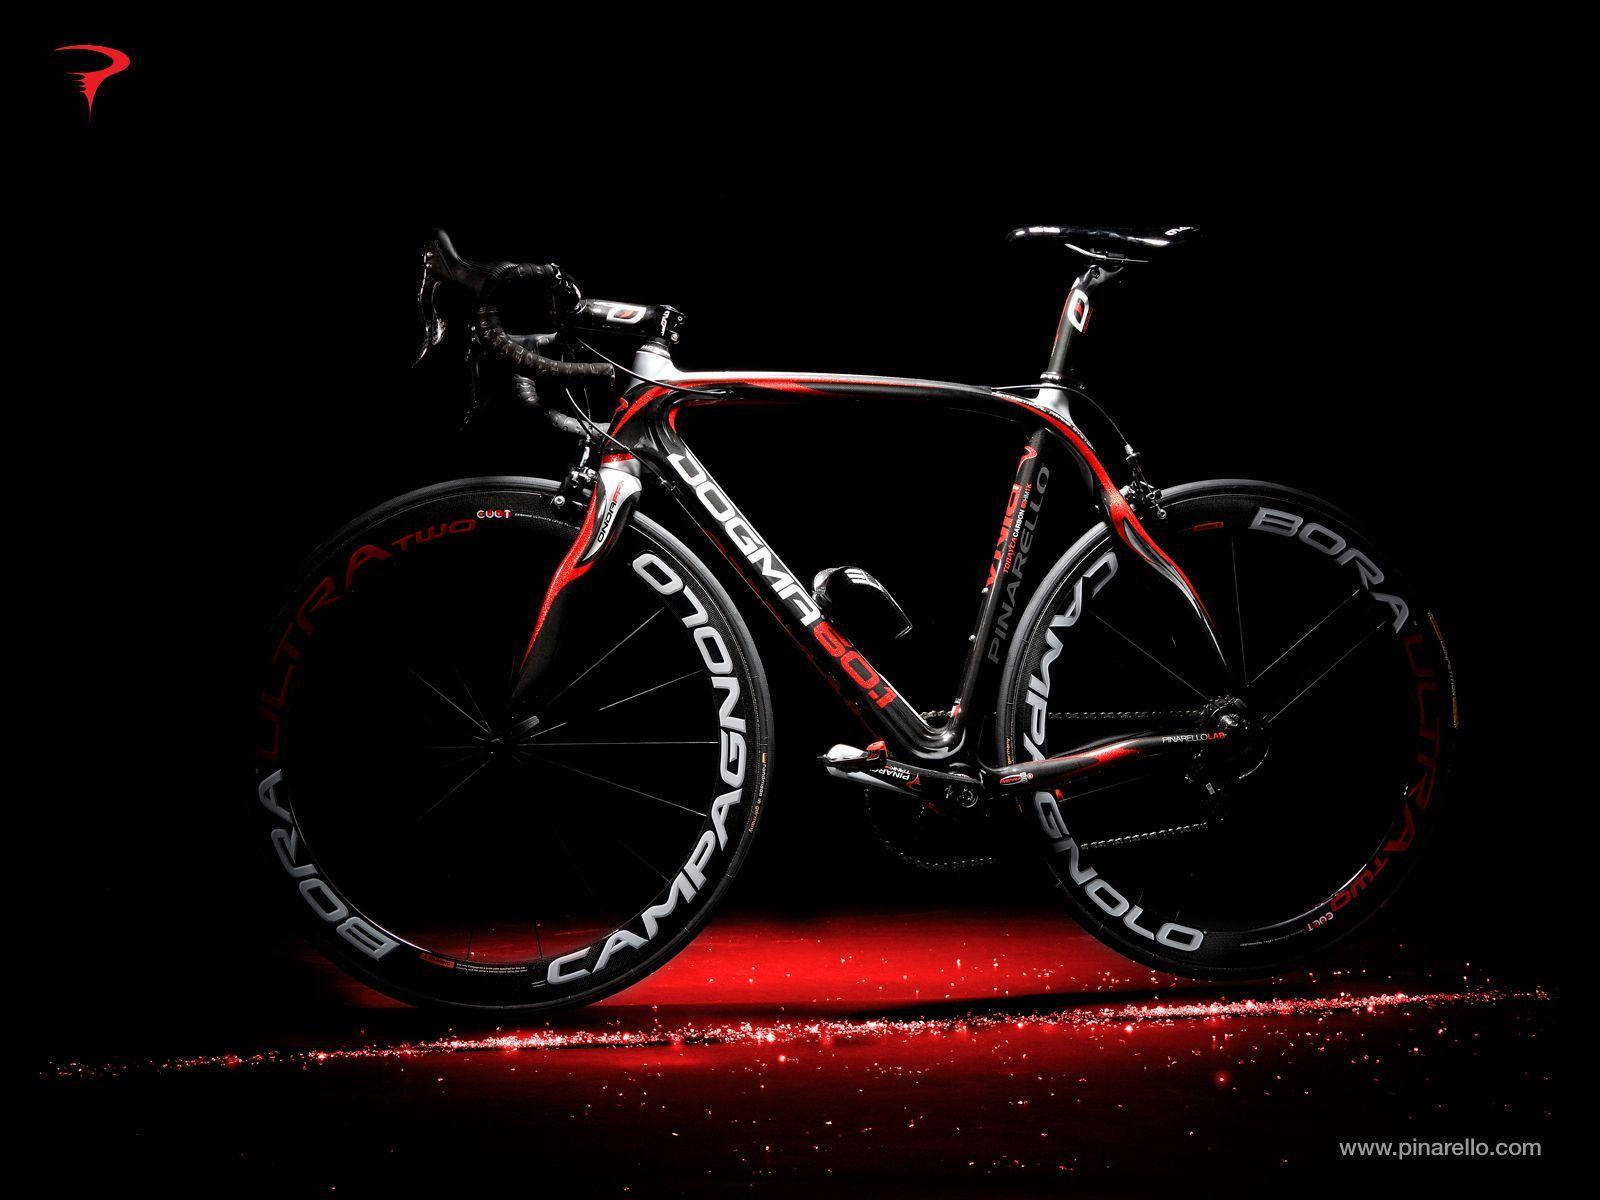 Pinarello Dogma // 2011 road bike of the year. Endurance